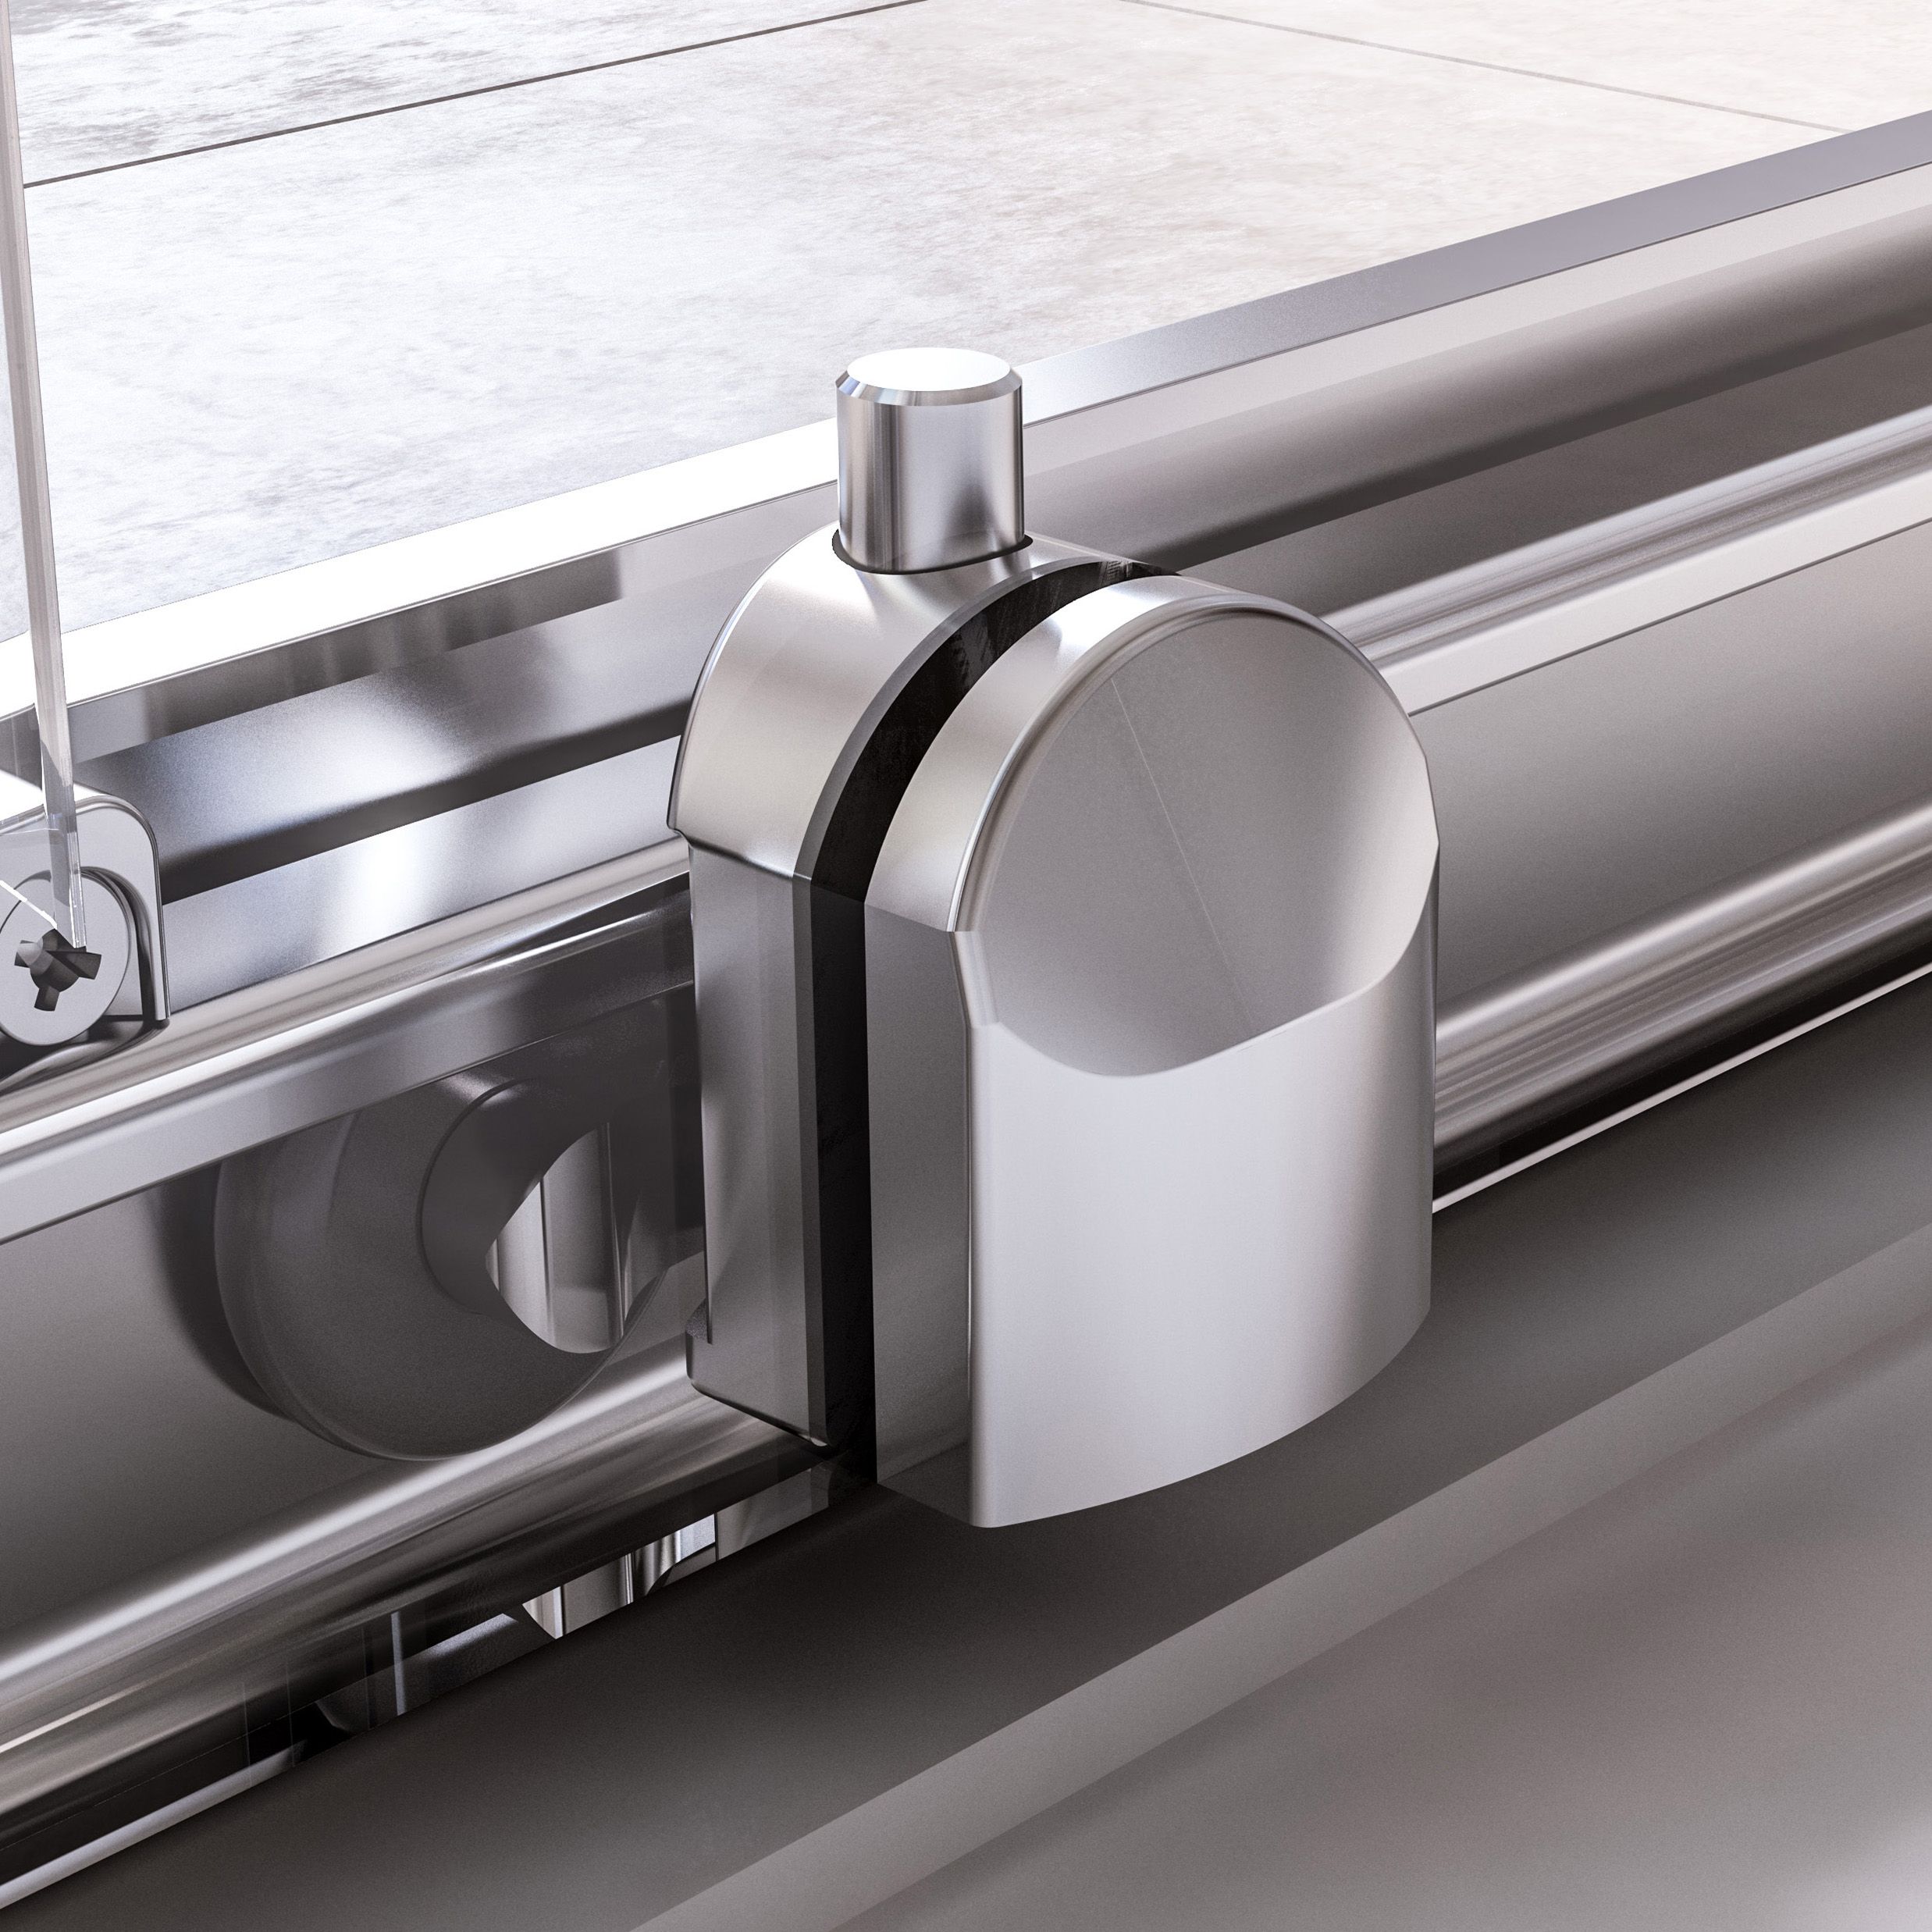 Aqualux Edge 6 Semi-framed Silver effect Clear glass Sliding Shower Door (H)193.5cm (W)120cm